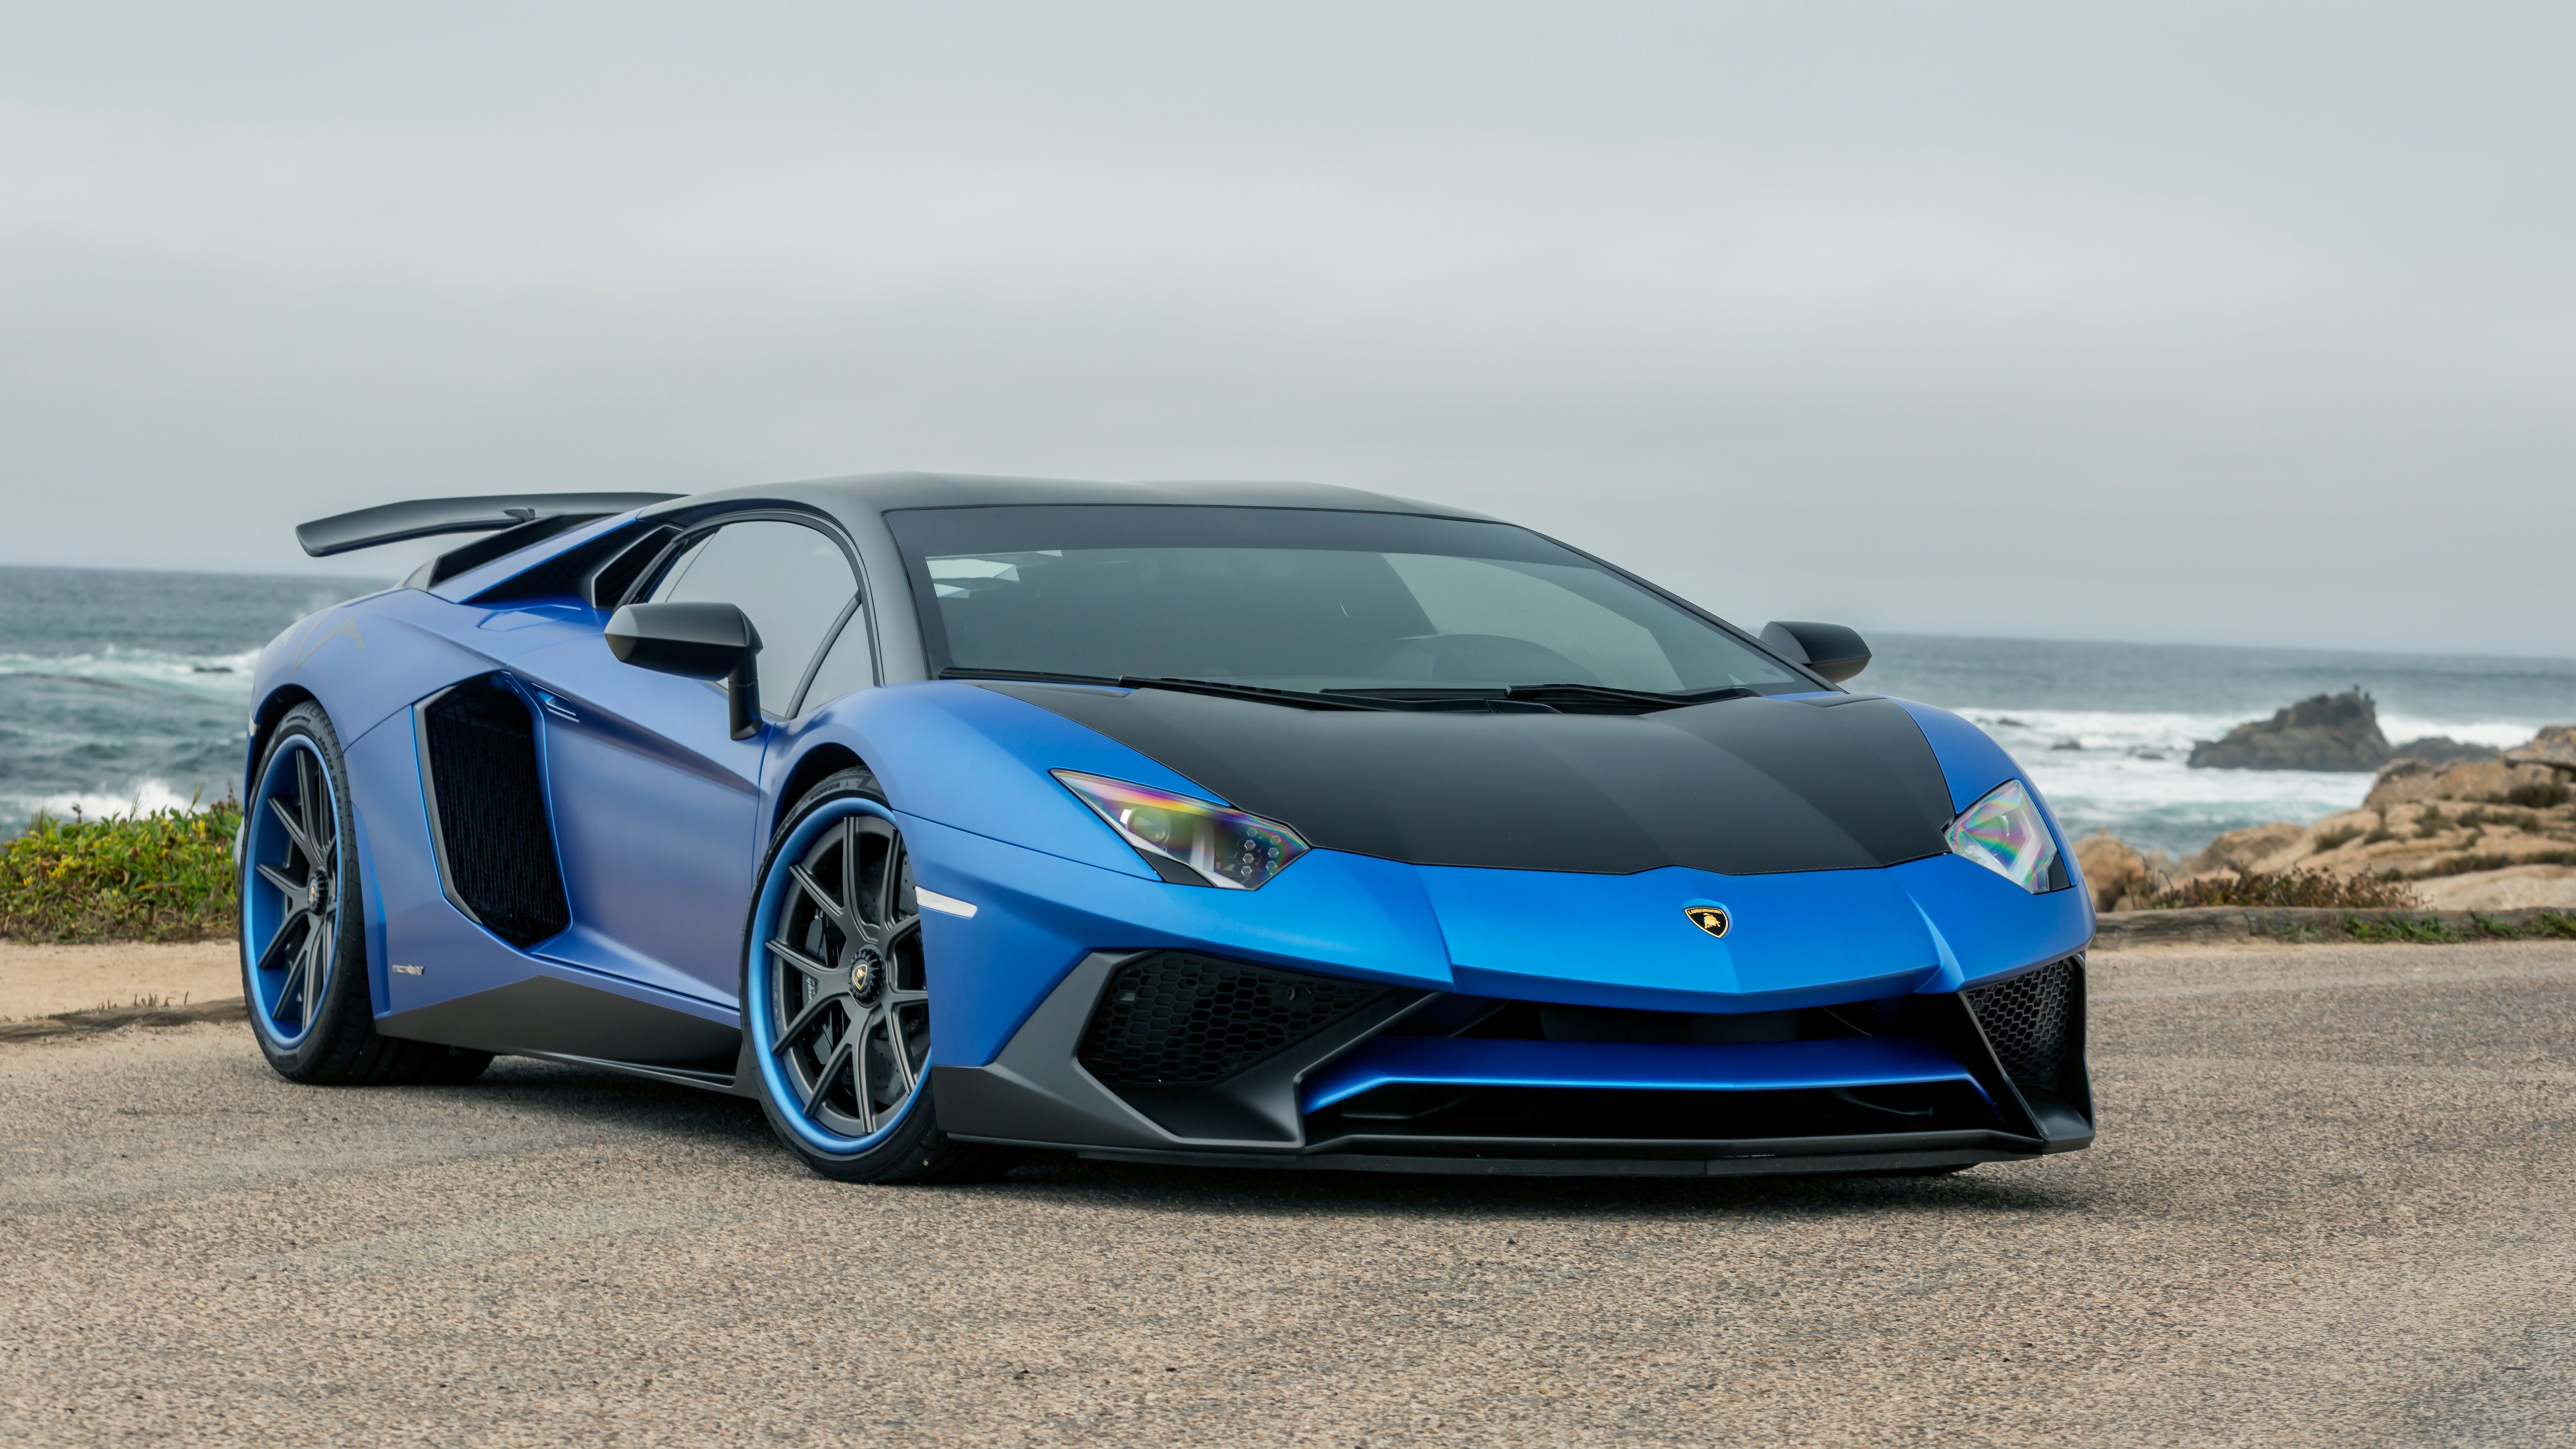 Blue Lamborghini Car Widescreen Wallpaper 59994 5120x2880 px